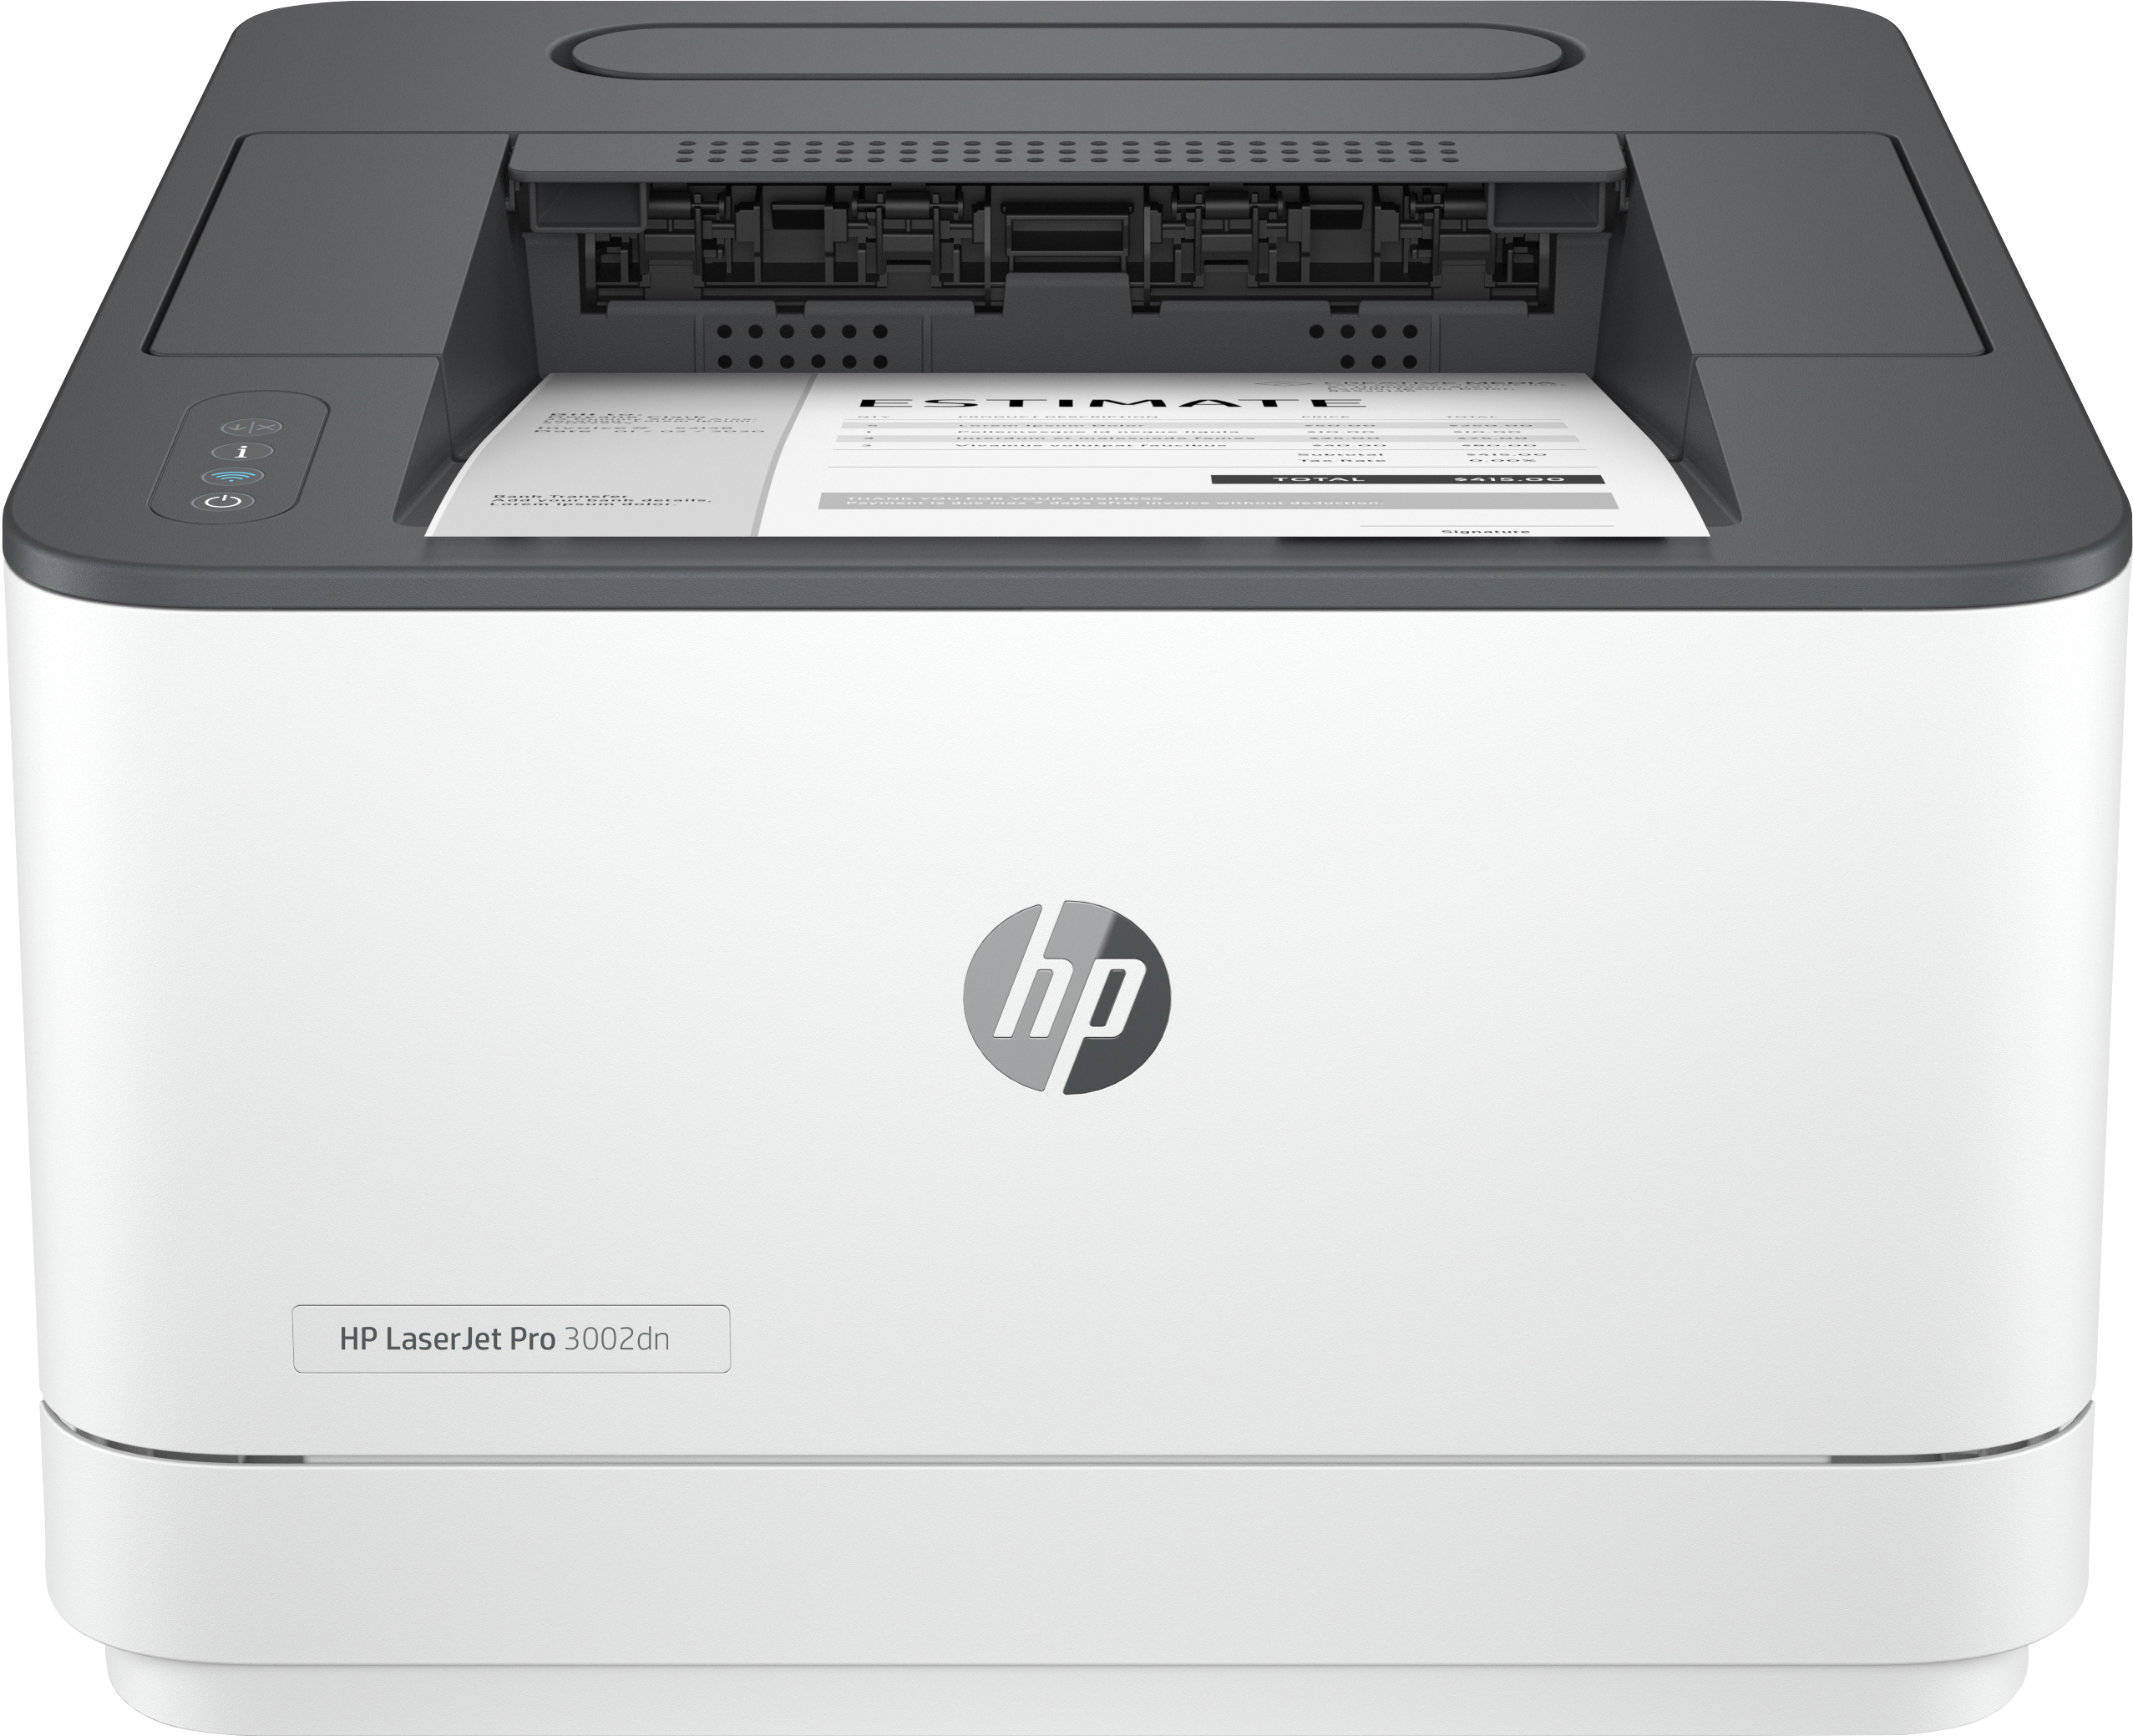 HP LaserJet Pro HP LaserJet Pro 3002dn printer, Zwart-wit, Printer voor Kleine en middelgrote ondernemingen, Print, Dual-band Wi-Fi; Optimale beveiliging; Energiezuinig; Eerste pagina gereed; printen; Roam (3G651F#B19) kopen ...